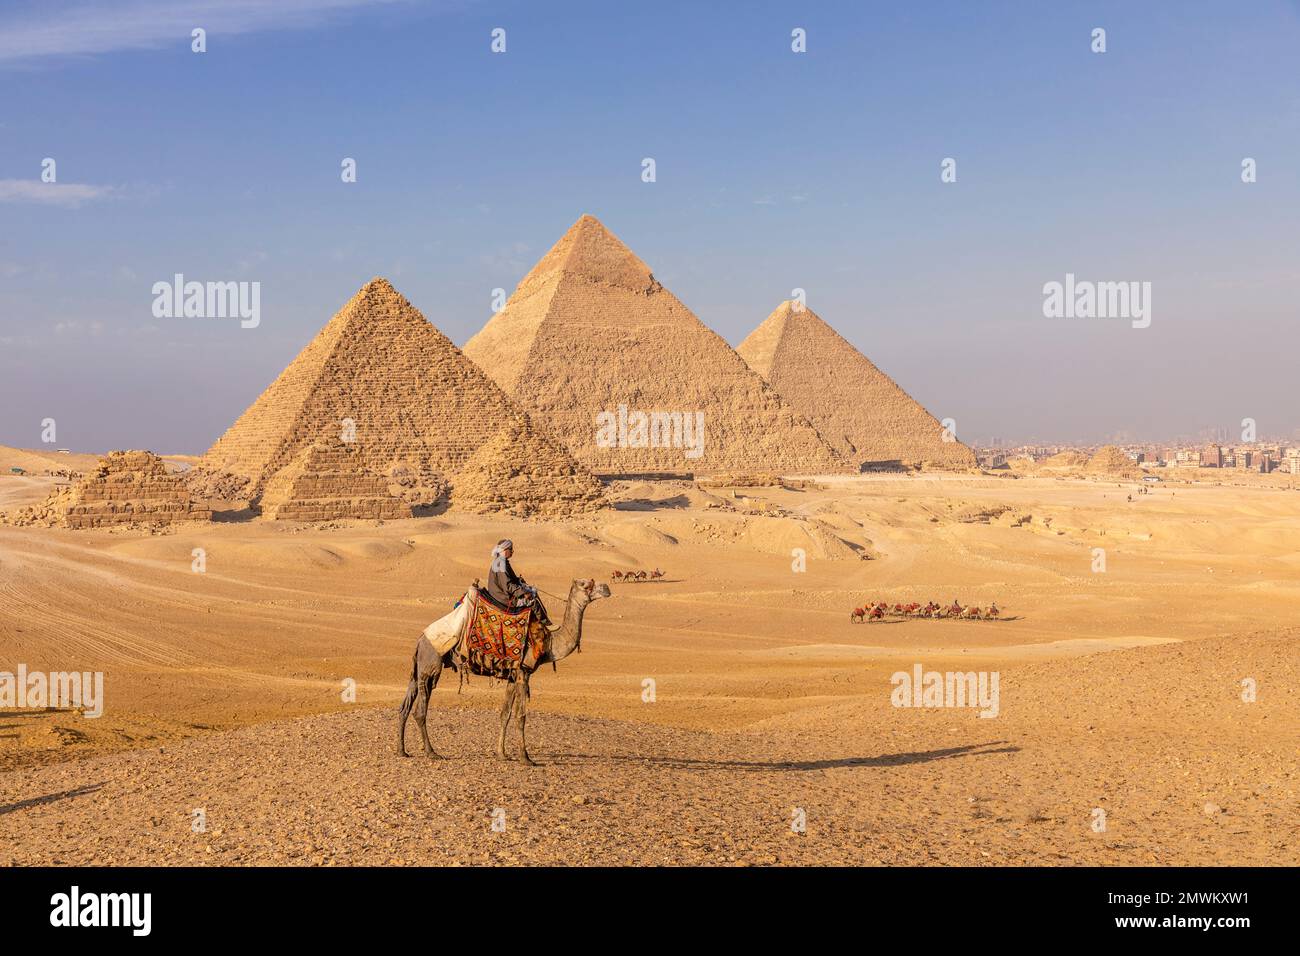 Pyramiden von Gizeh mit Kamel bei Sonnenuntergang, Kairo, Ägypten Stockfoto